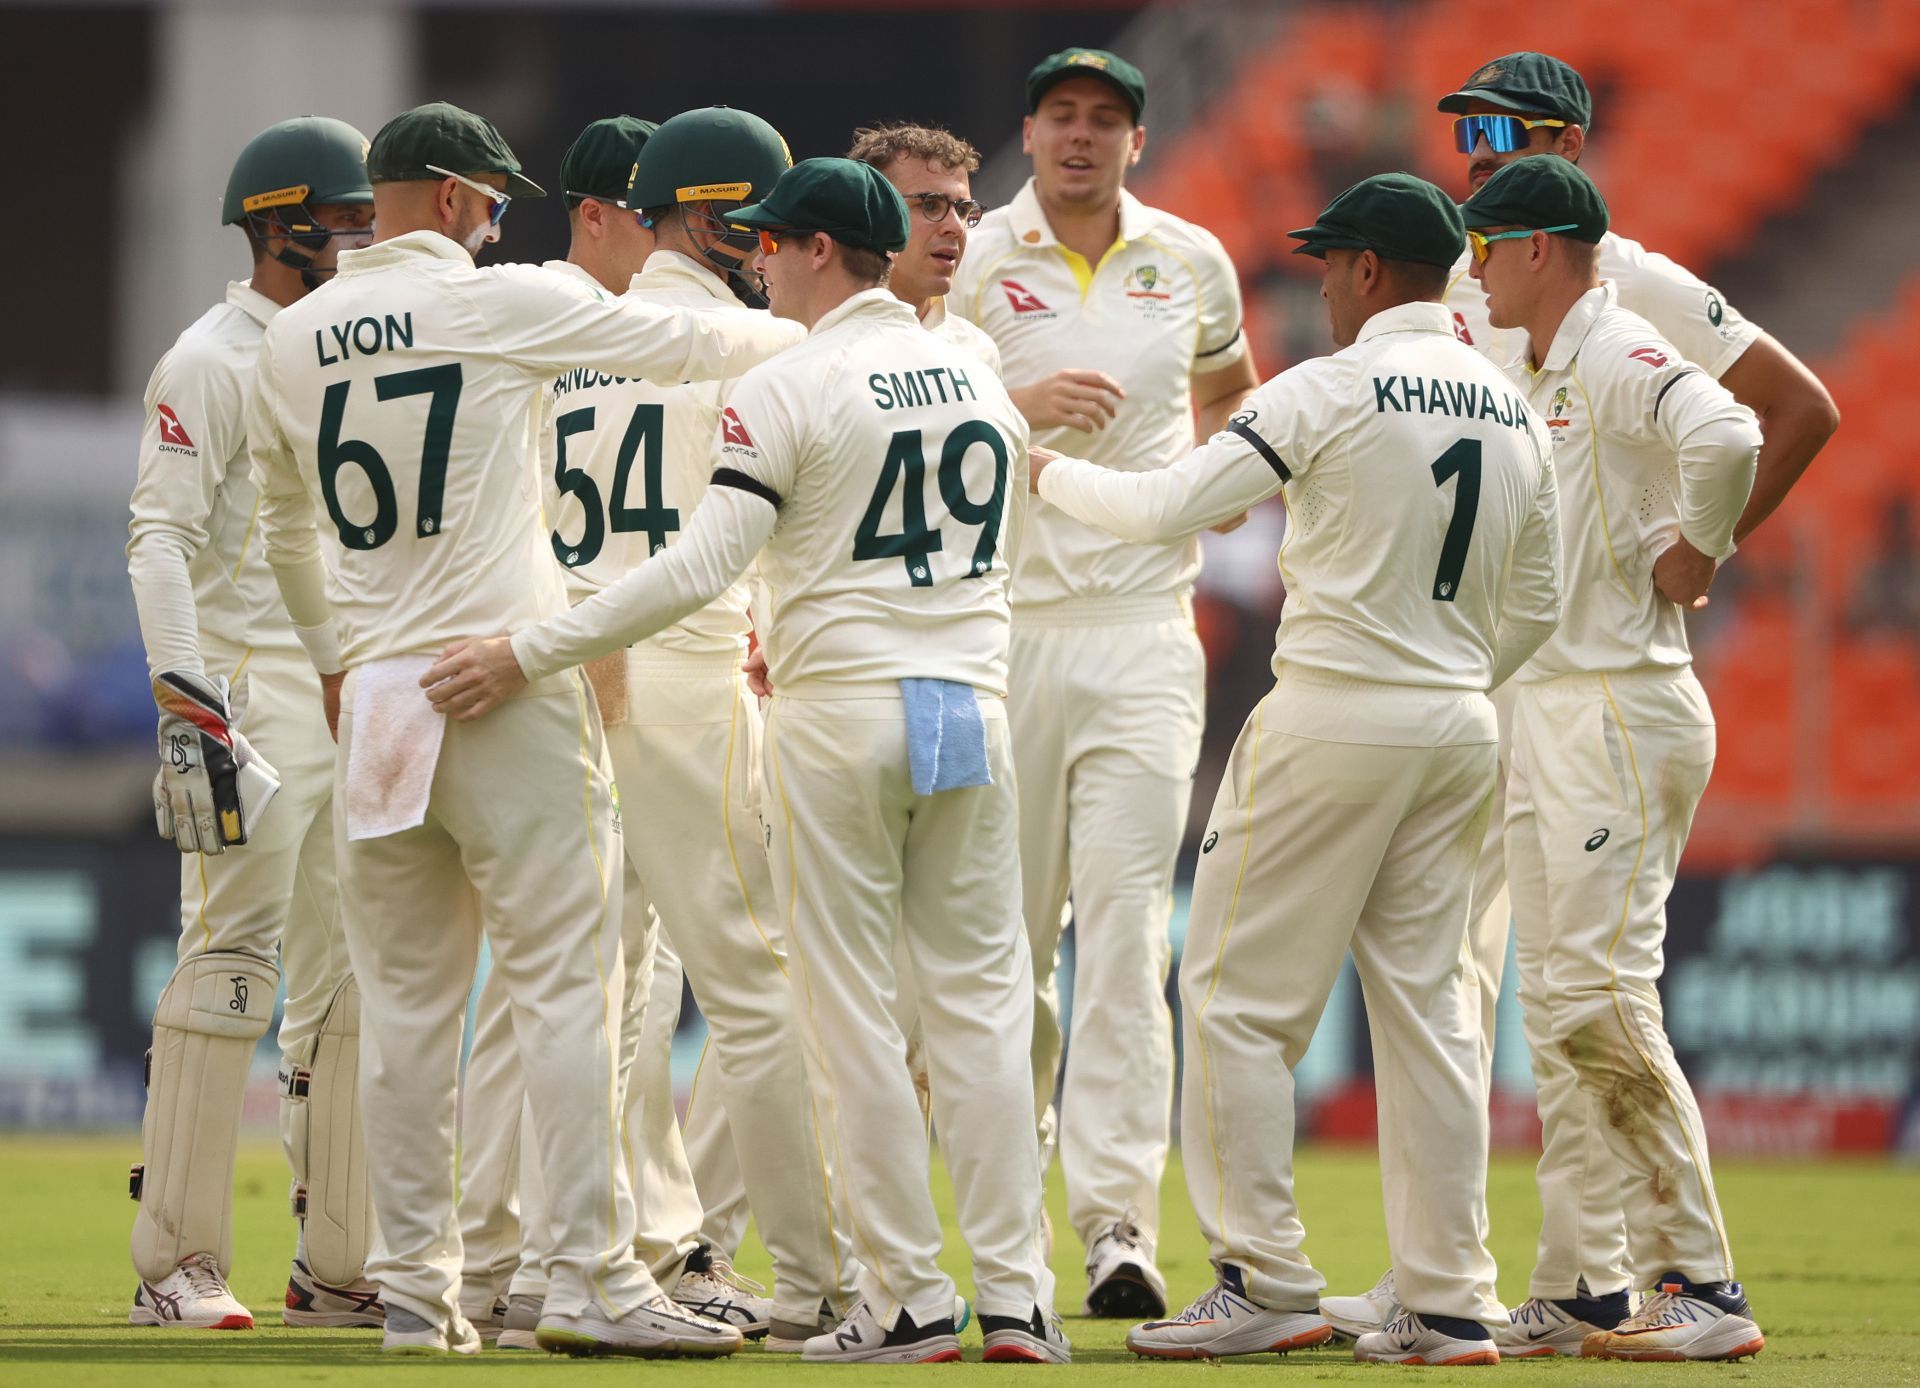 Australia cricket team. (Image Credits: Getty)